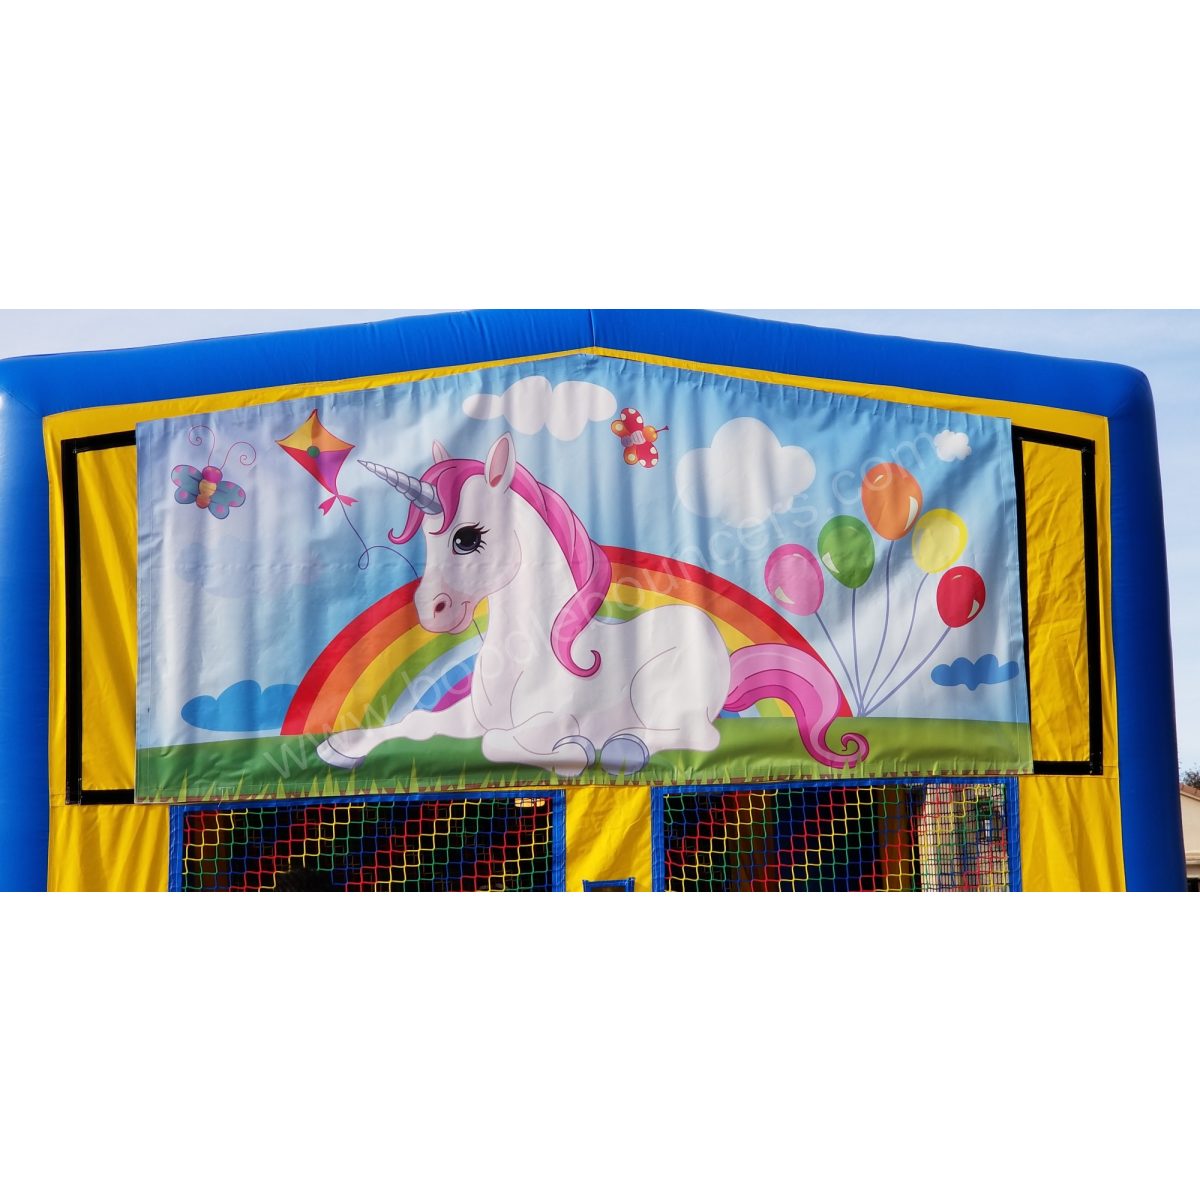 Unicorn Banner